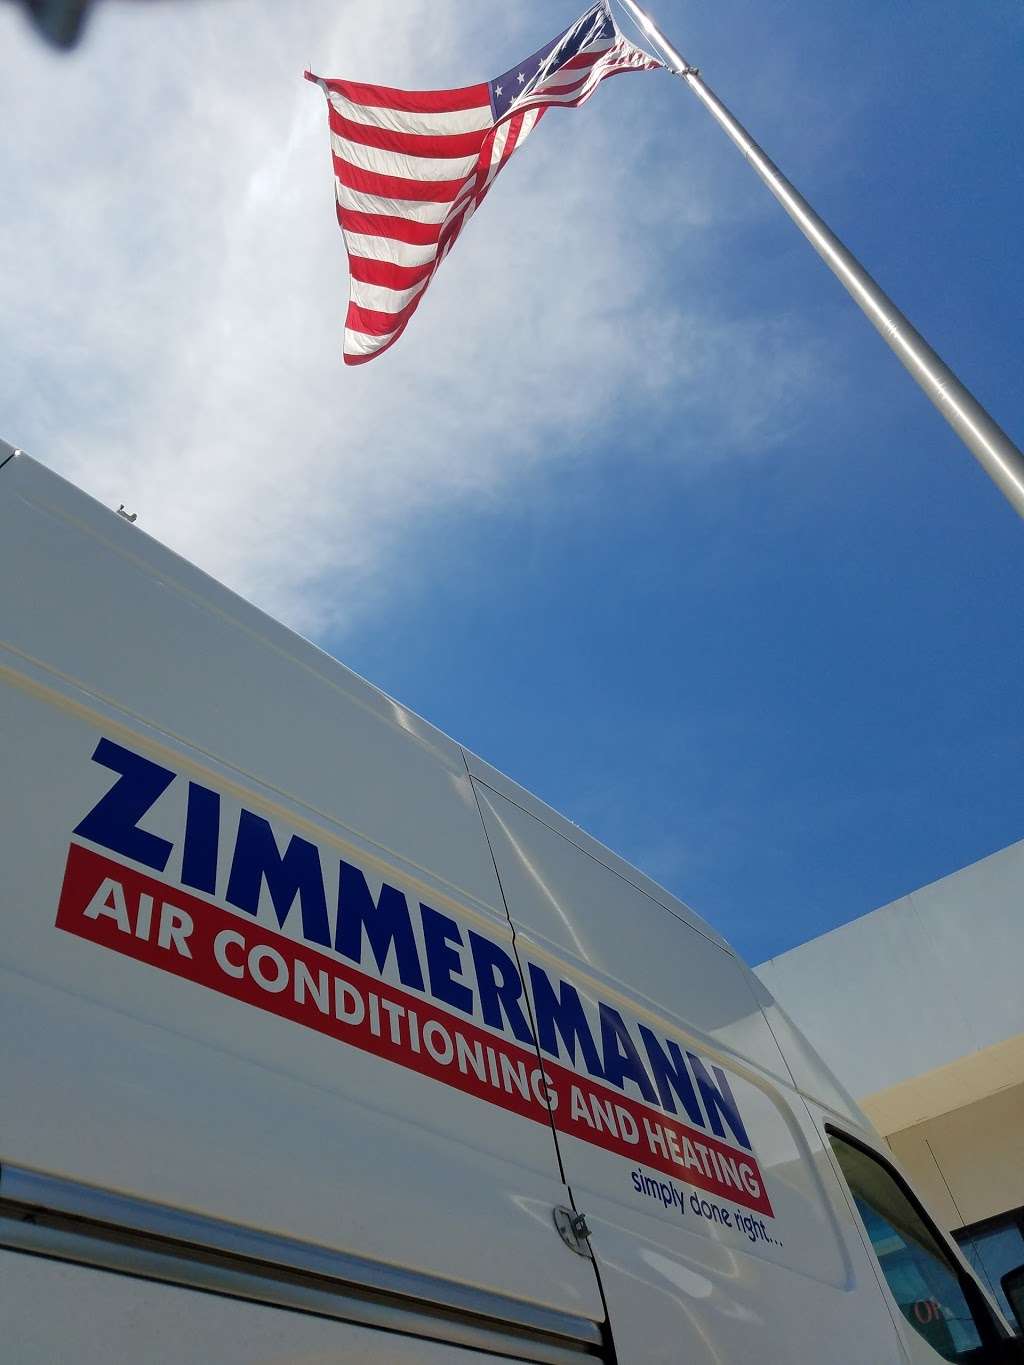 Zimmermann Services | 7790 Mainland Dr Ste 101, San Antonio, TX 78250, USA | Phone: (210) 340-8283